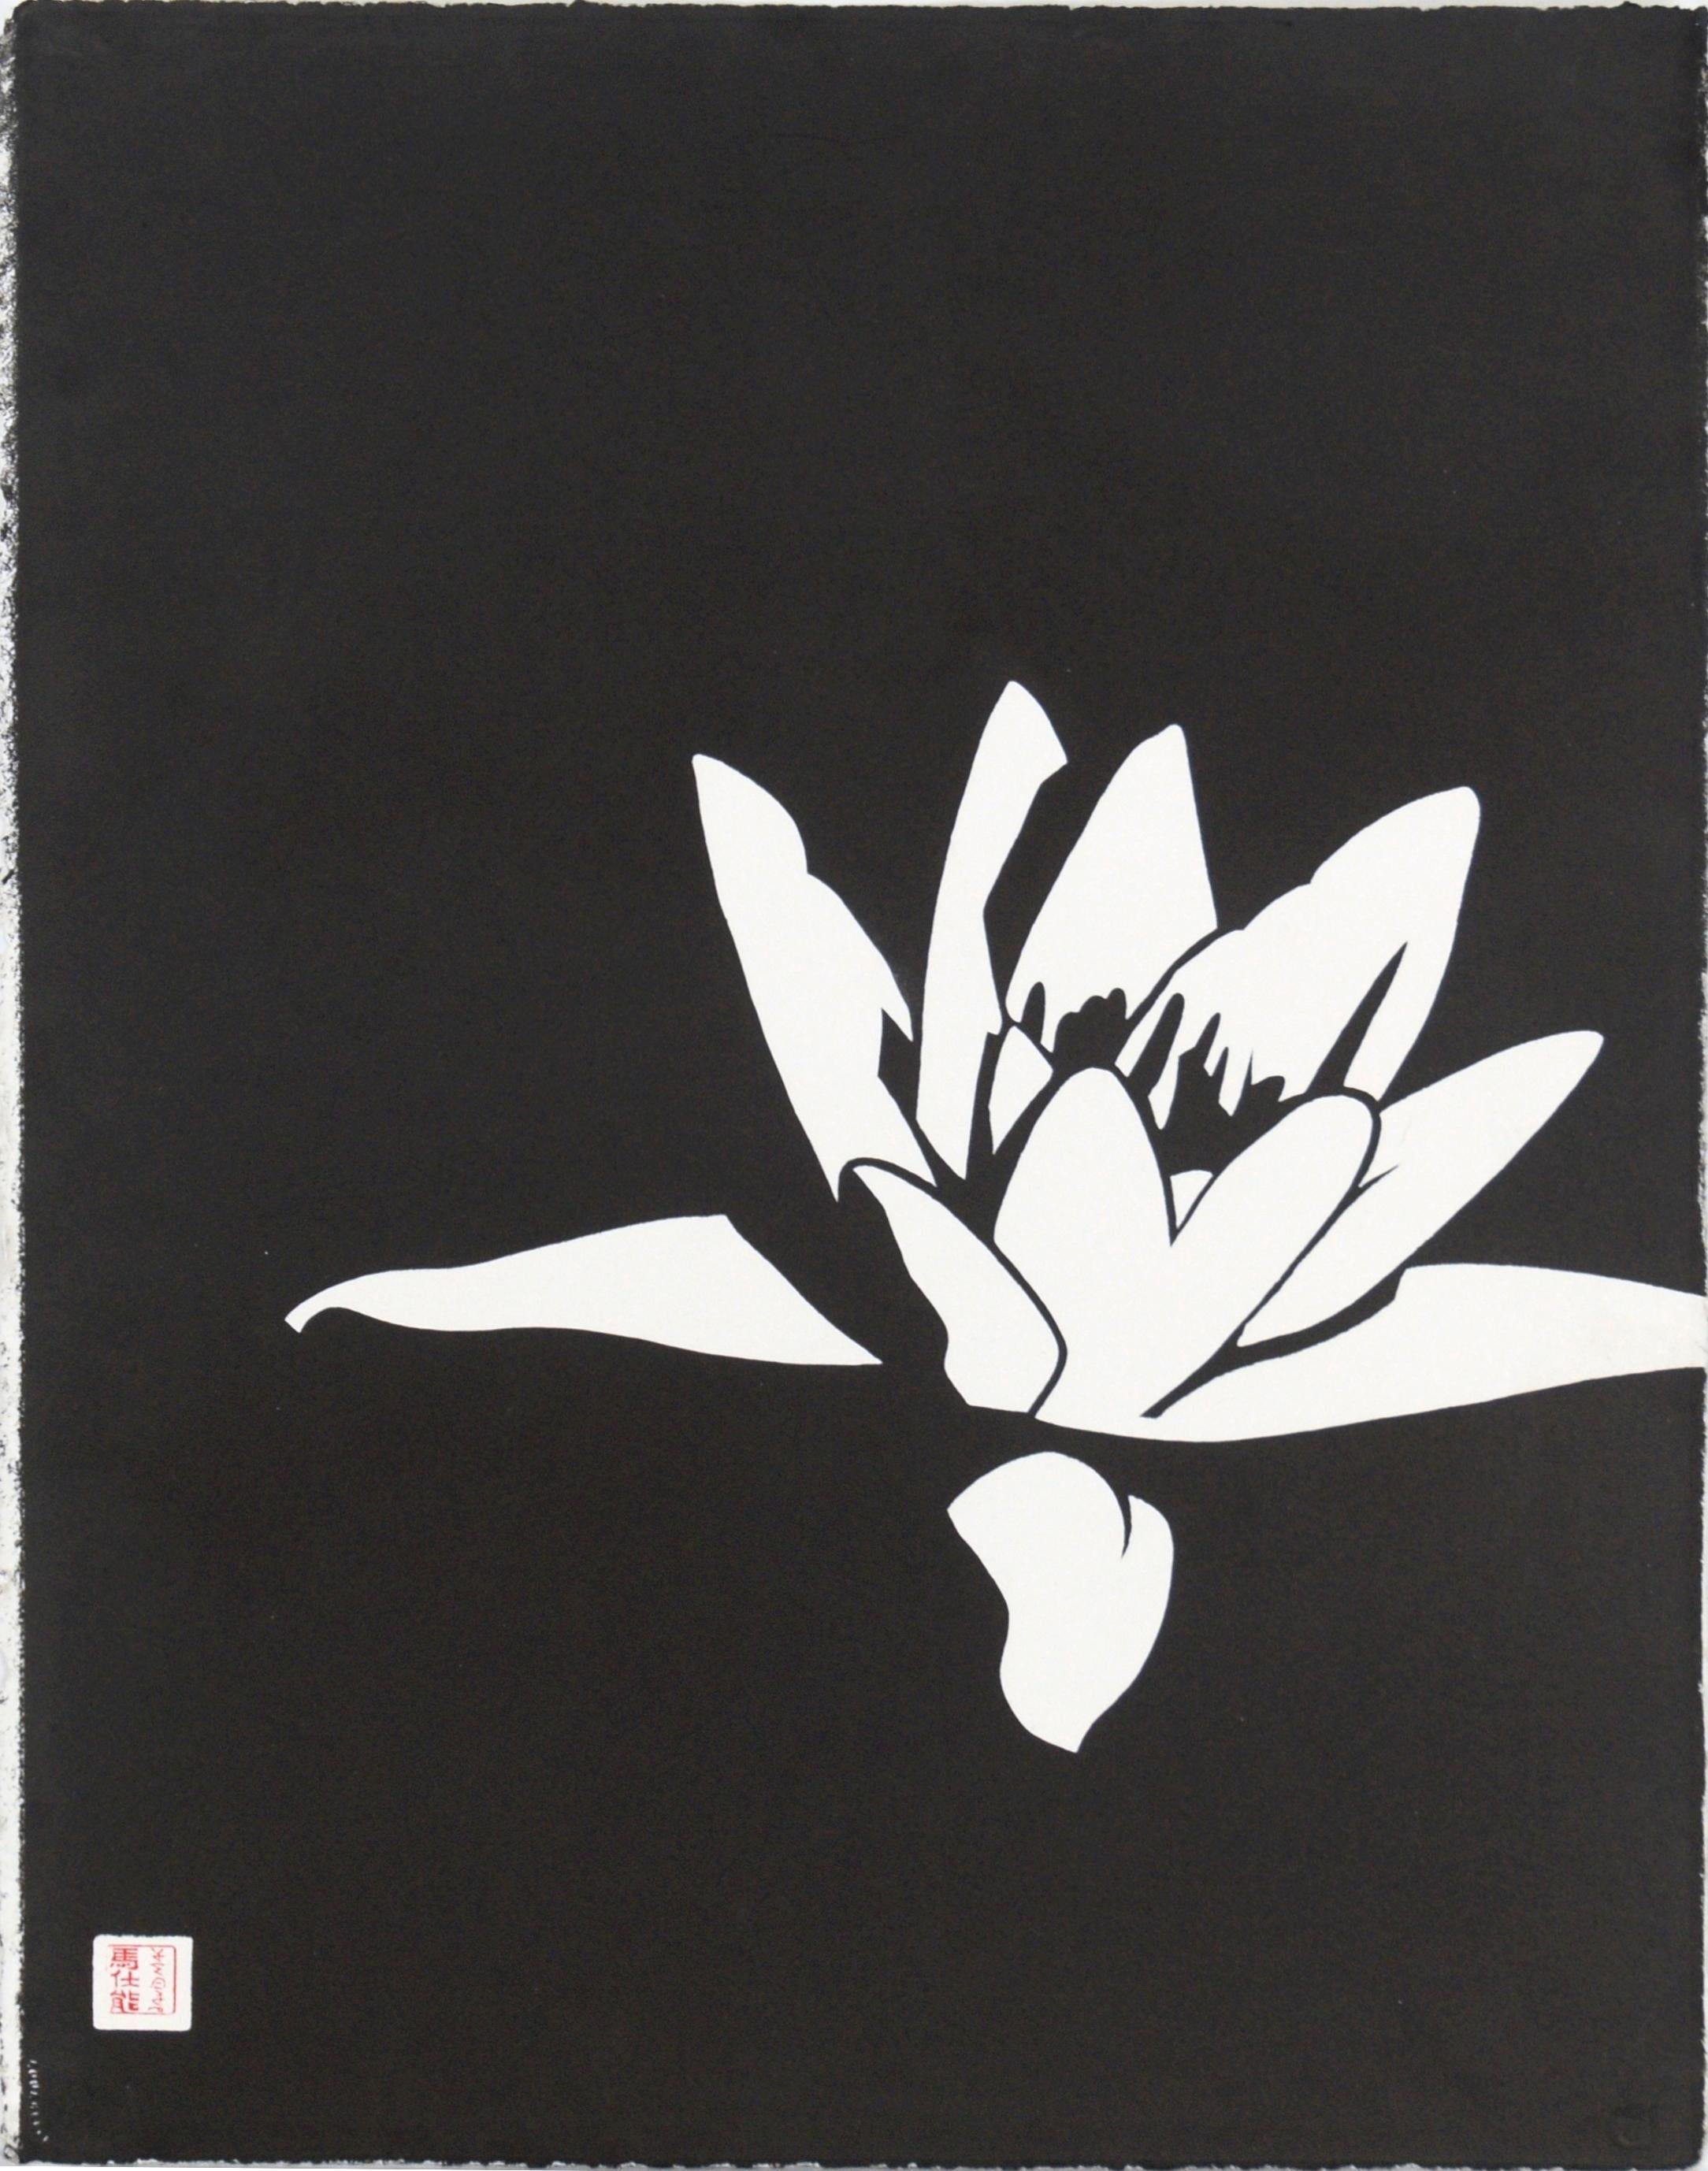 Abstract Print David Mar - White Lily - Sérigraphie Pop Art minimaliste